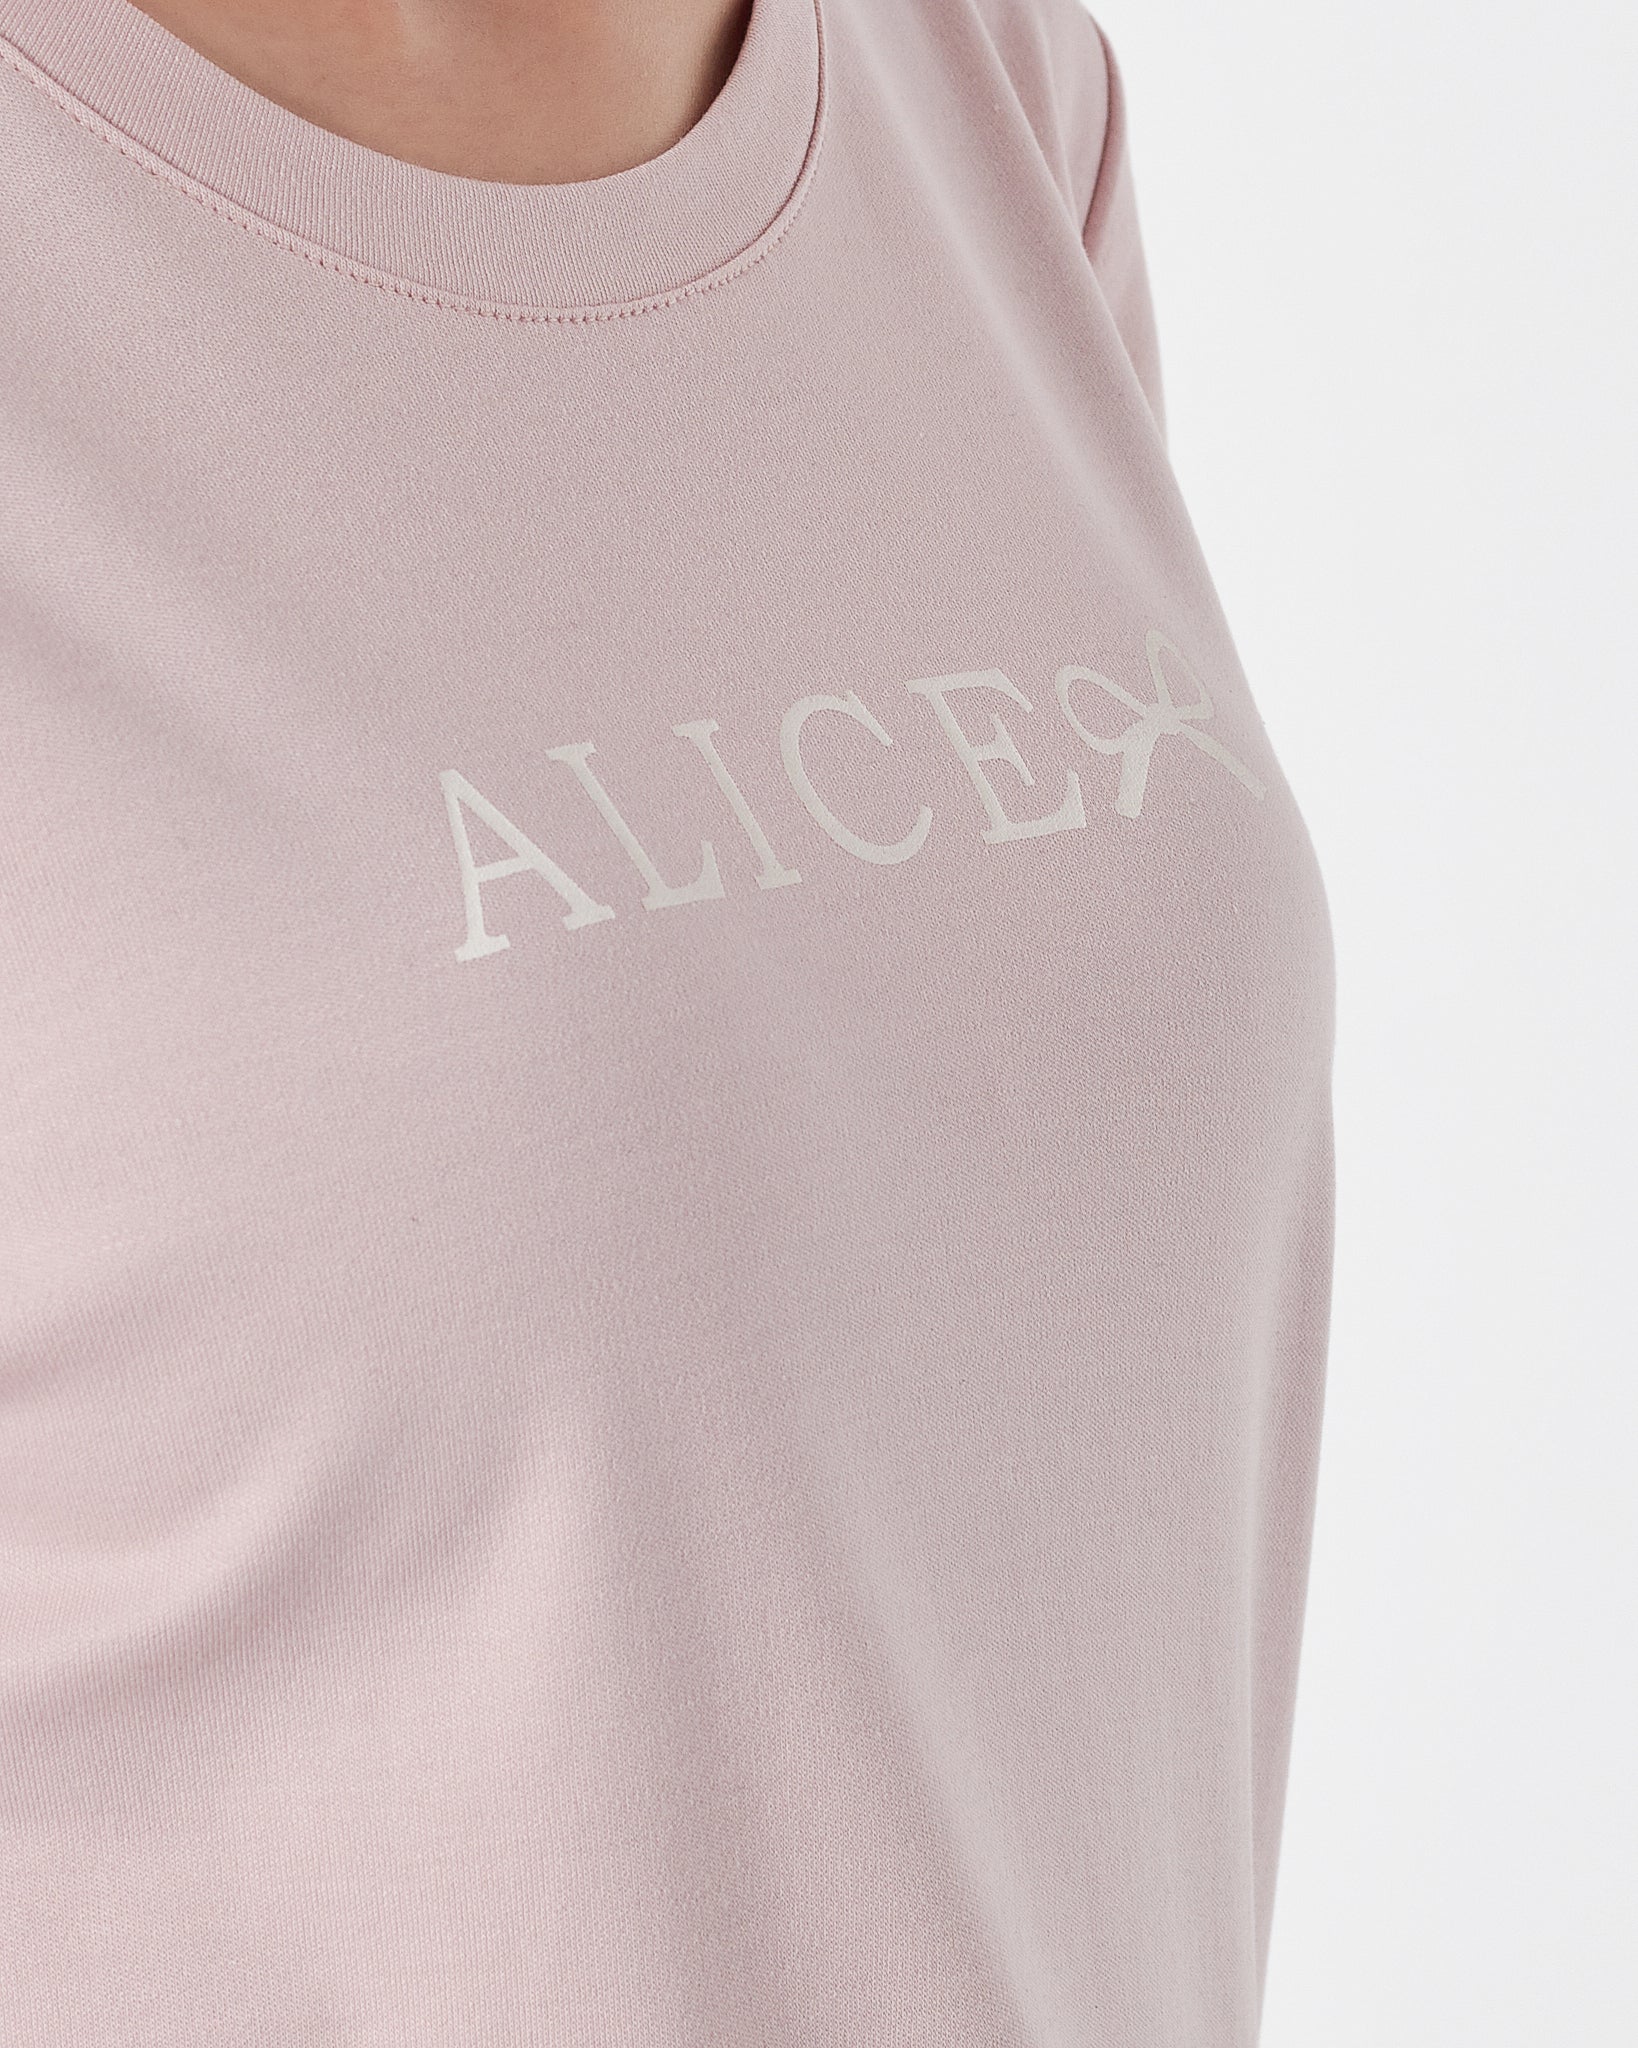 ALICE Lady Light Pink T-Shirt 12.90